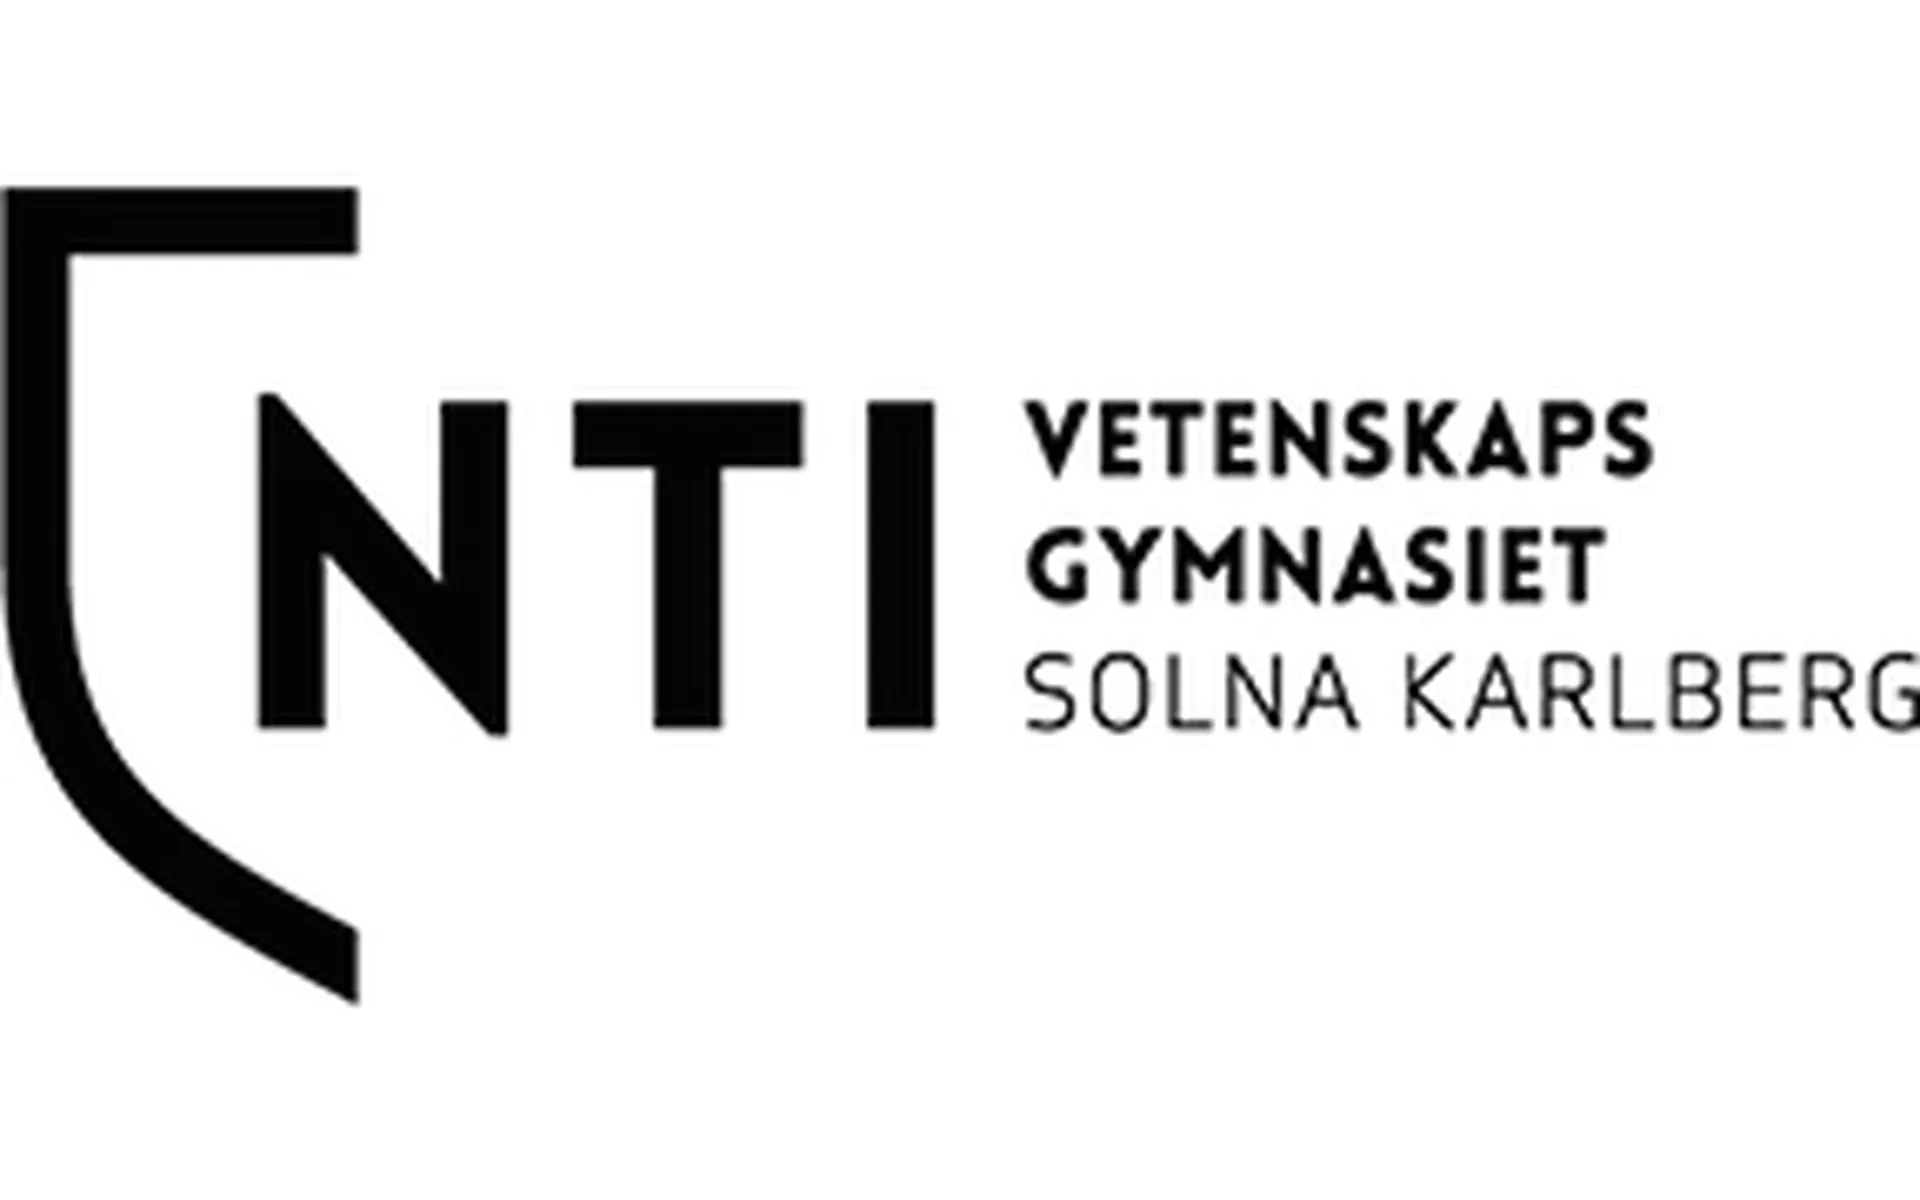 NTI Vetenskapsgymnasiet Solna Karlberg